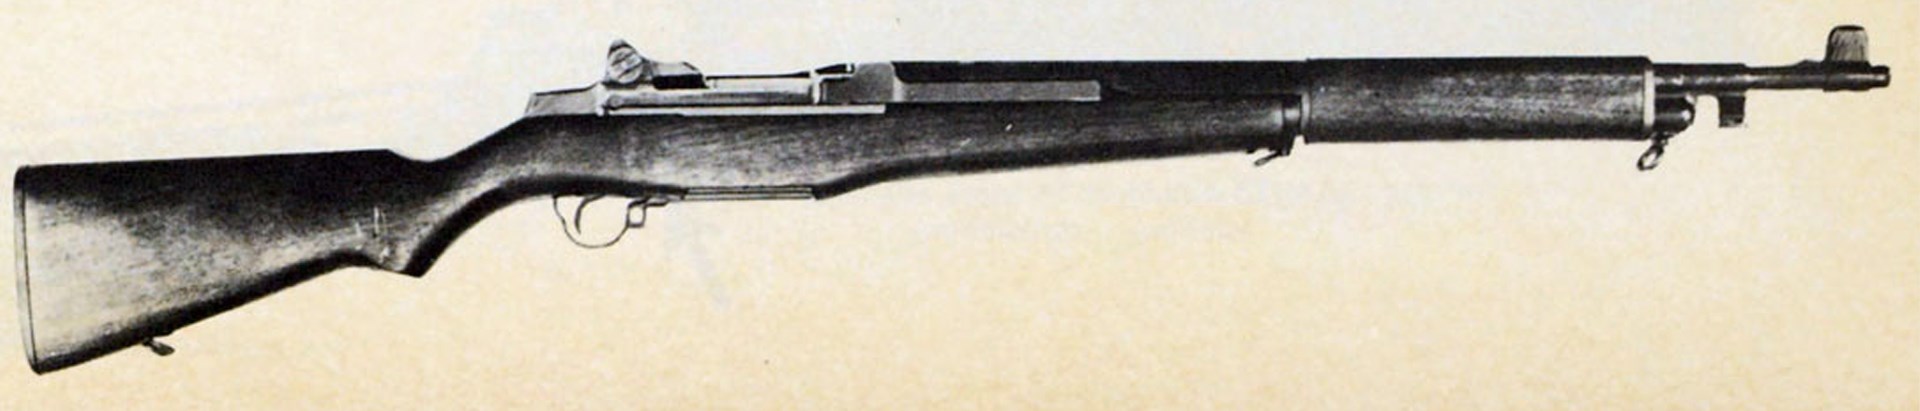 U.S. Rifle Cal. .30 M1E4.